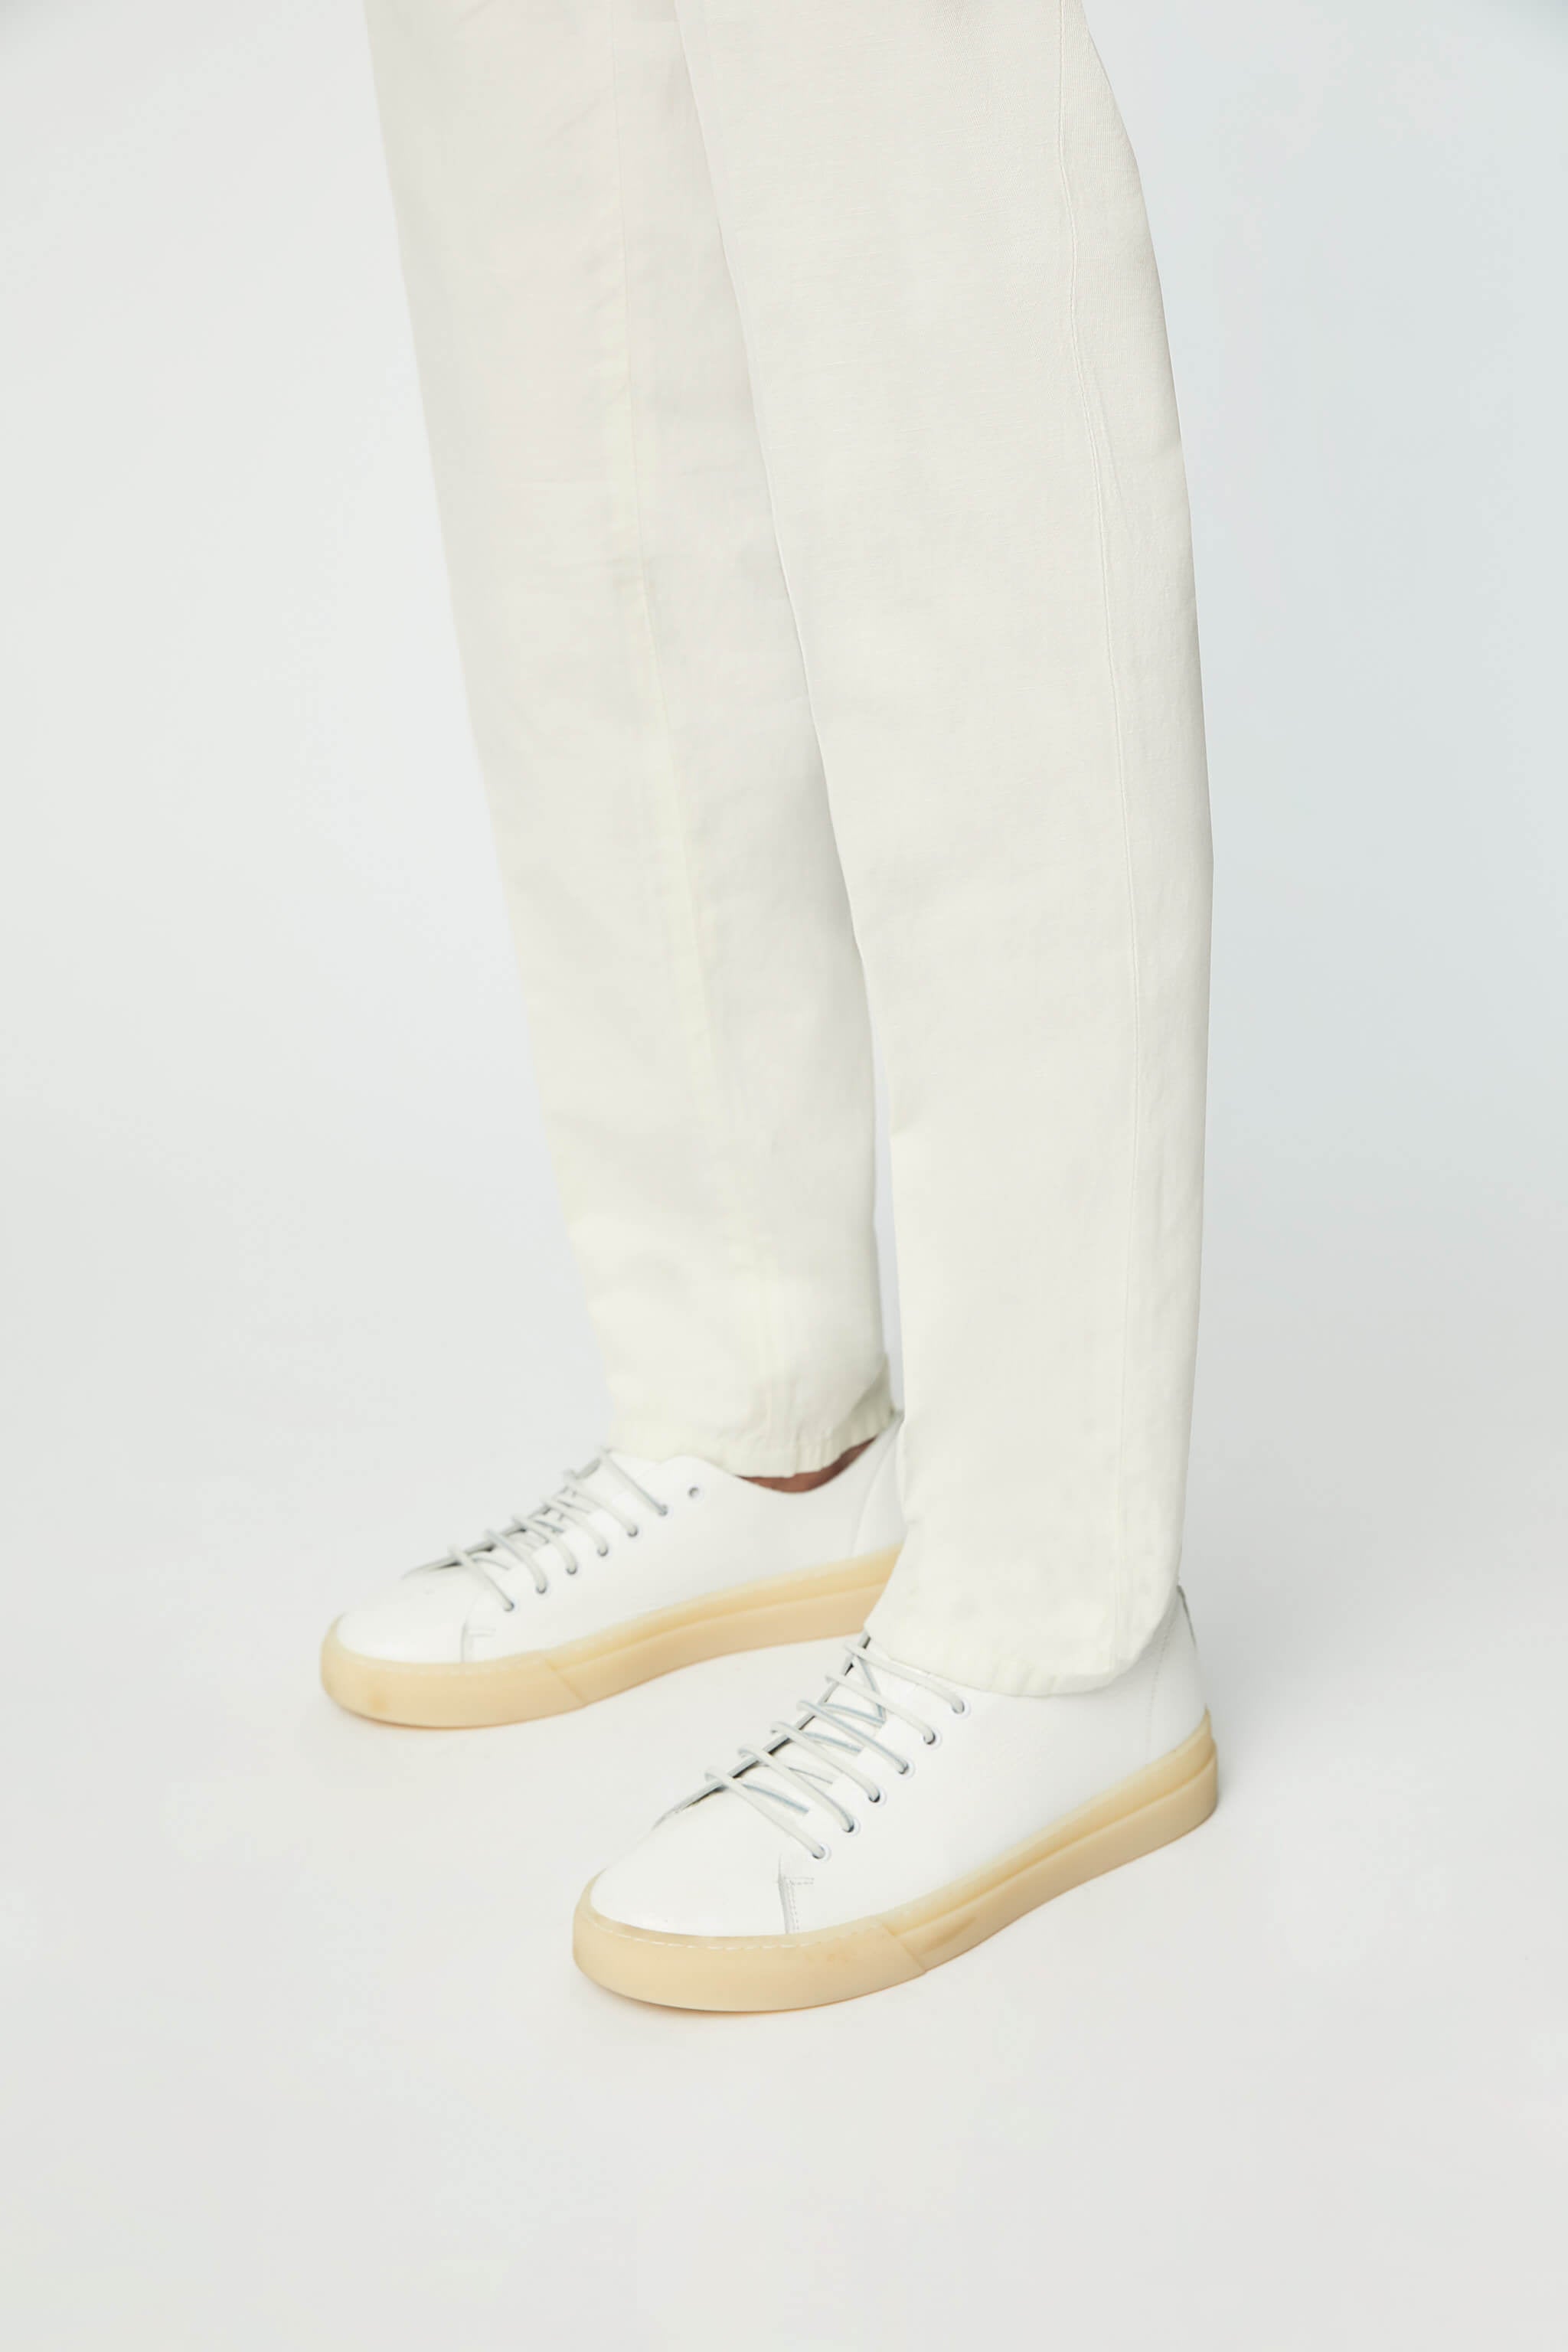 Garment-dyed ELTON pants in White